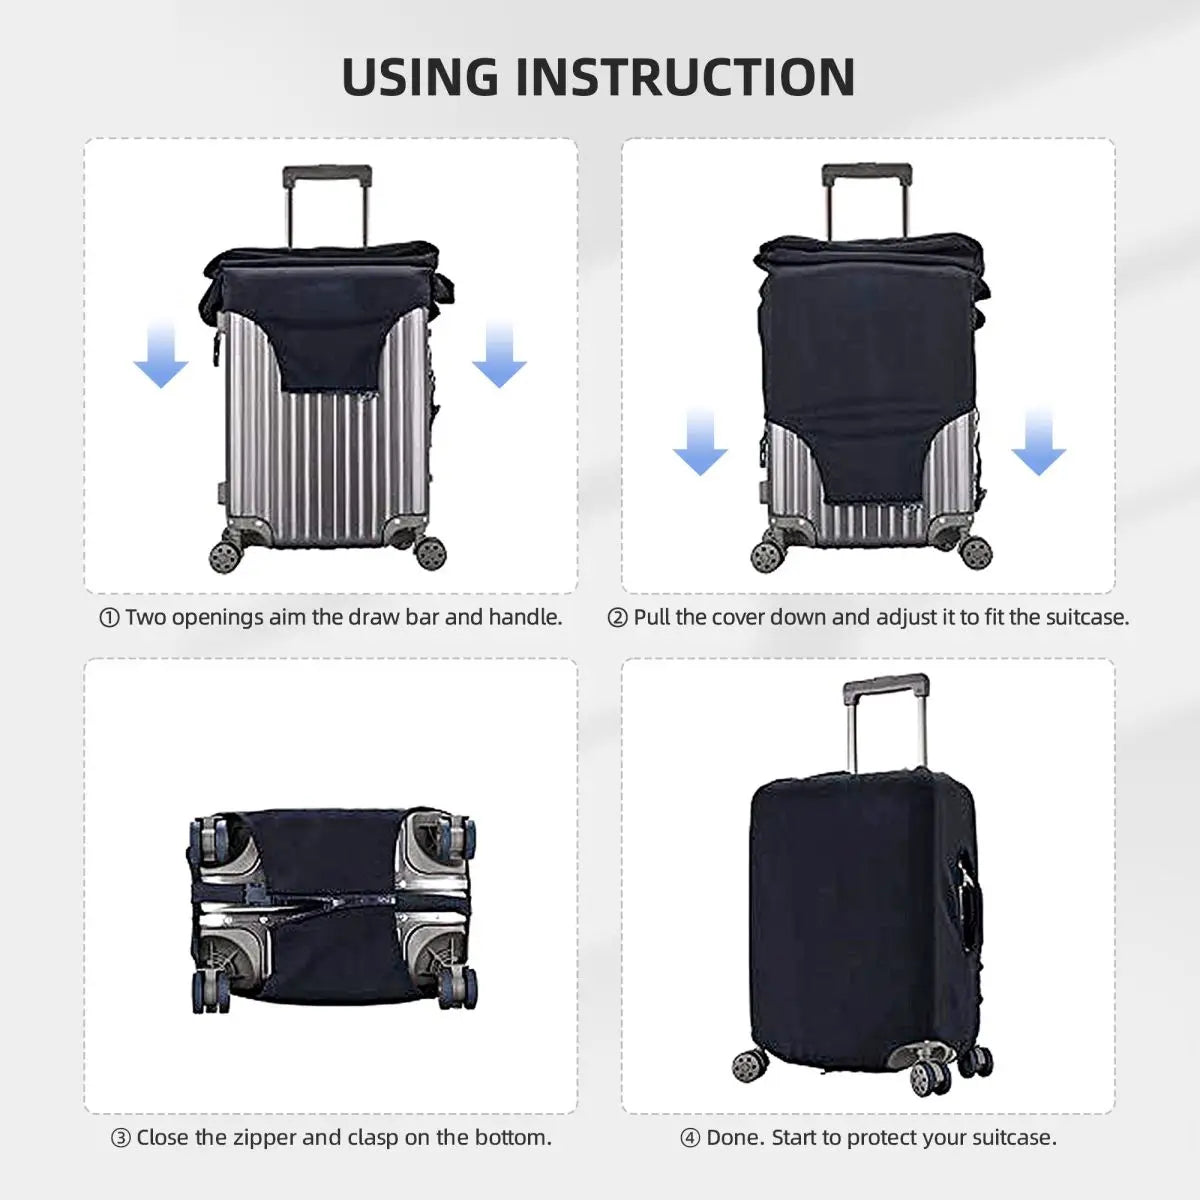 Luggage Cover - Crime Scene - True Crime - Forensic - Crime Scene Do Not Cross Pattern Suitcase Cover